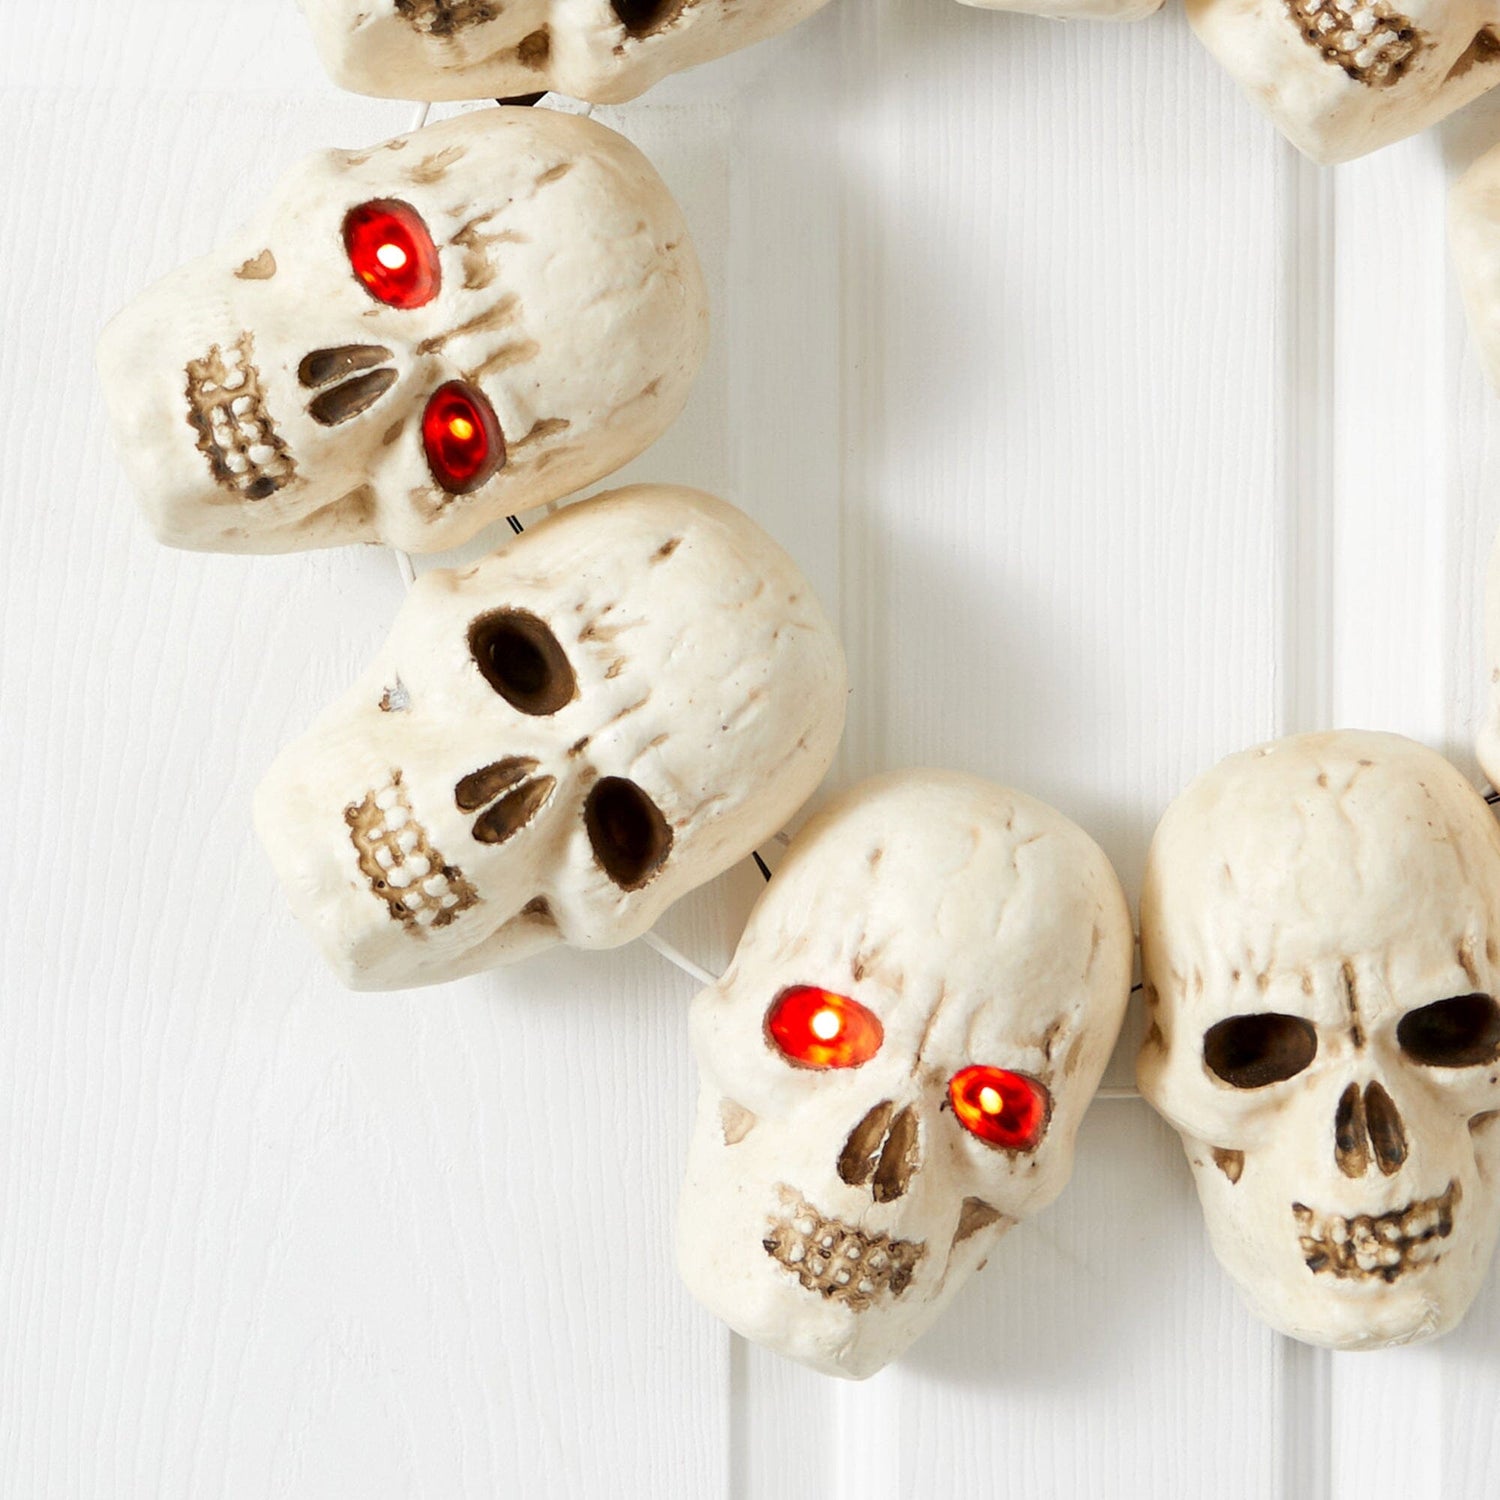 20” Halloween Skull Wreath with Lighted Eyes